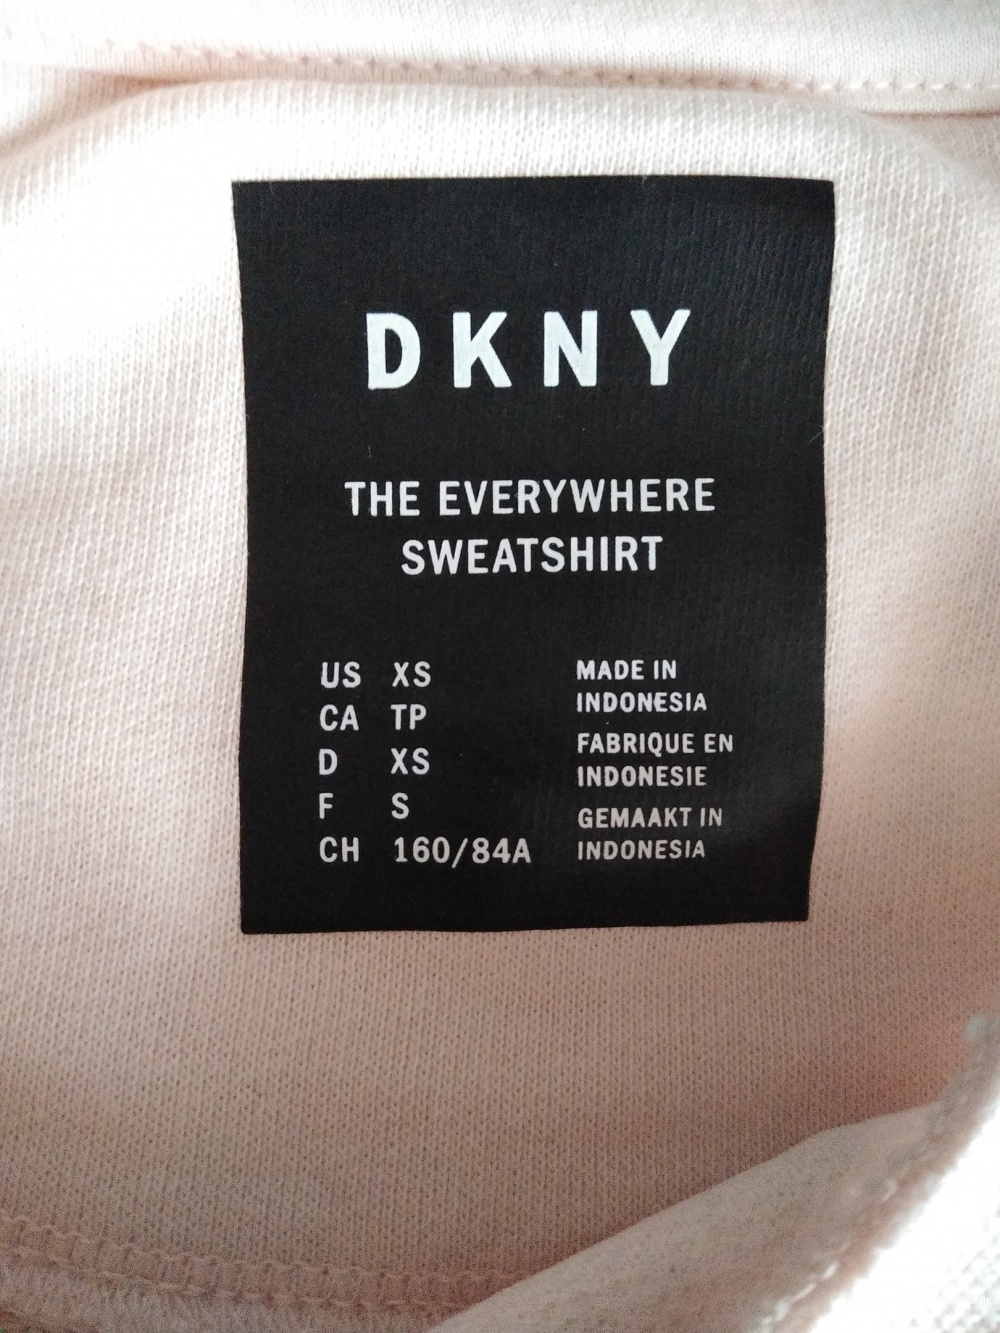 Свитшот DKNY. Размер: XS (на 42-44).